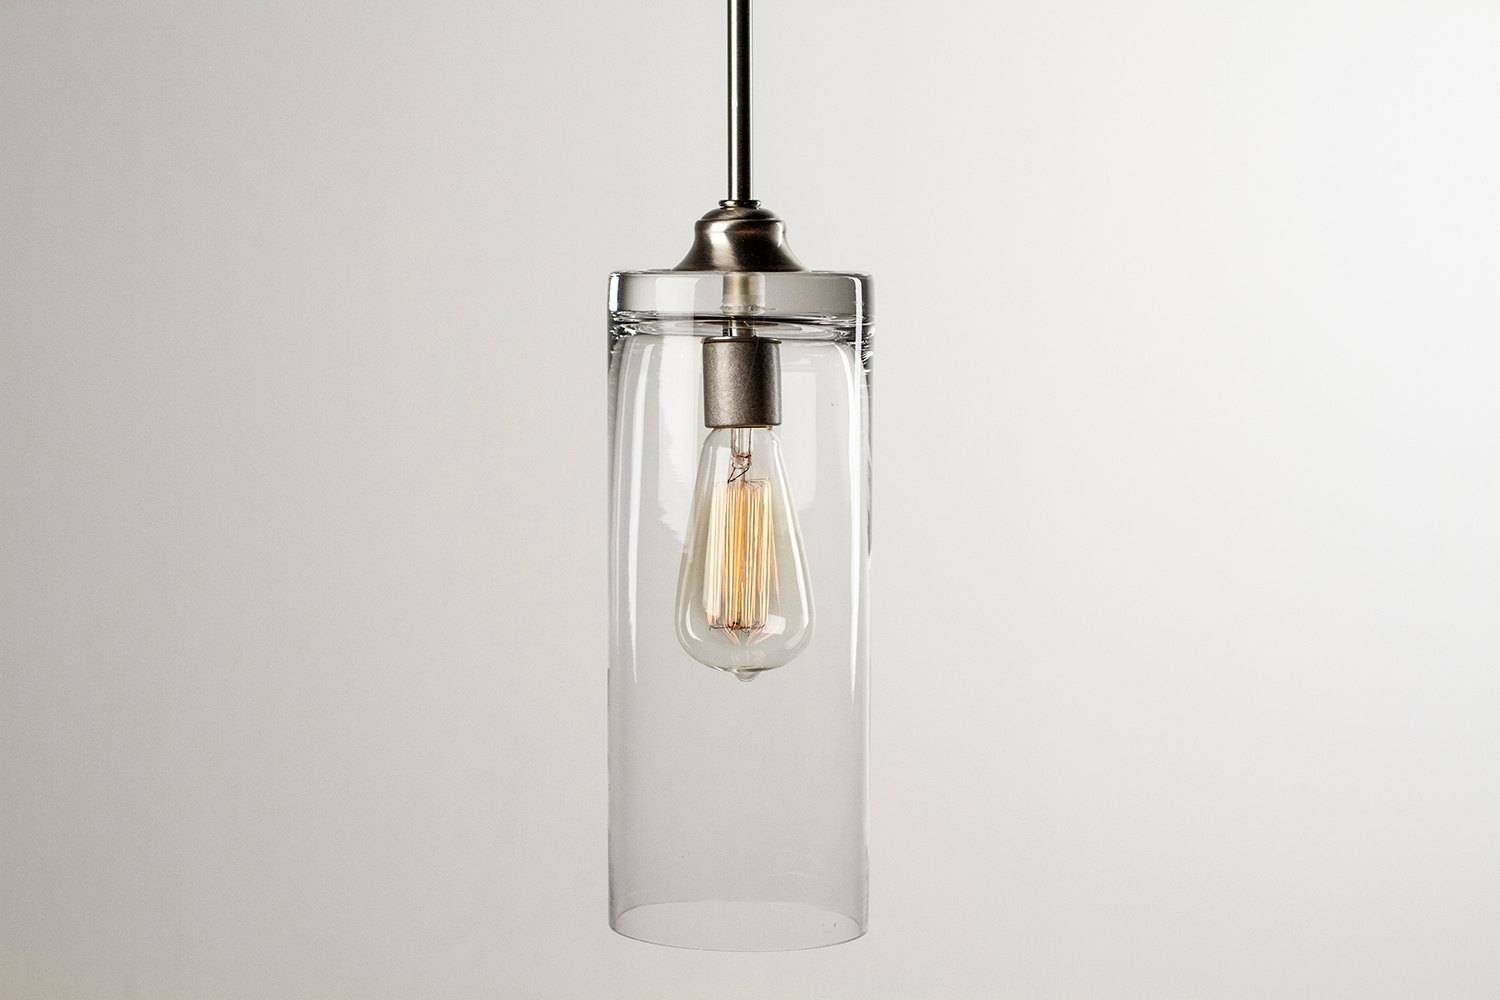 Pendant Light Fixture | Edison Bulb | Brushed Nickel | Cylinder Within Edison Bulb Pendant Lights (View 5 of 15)